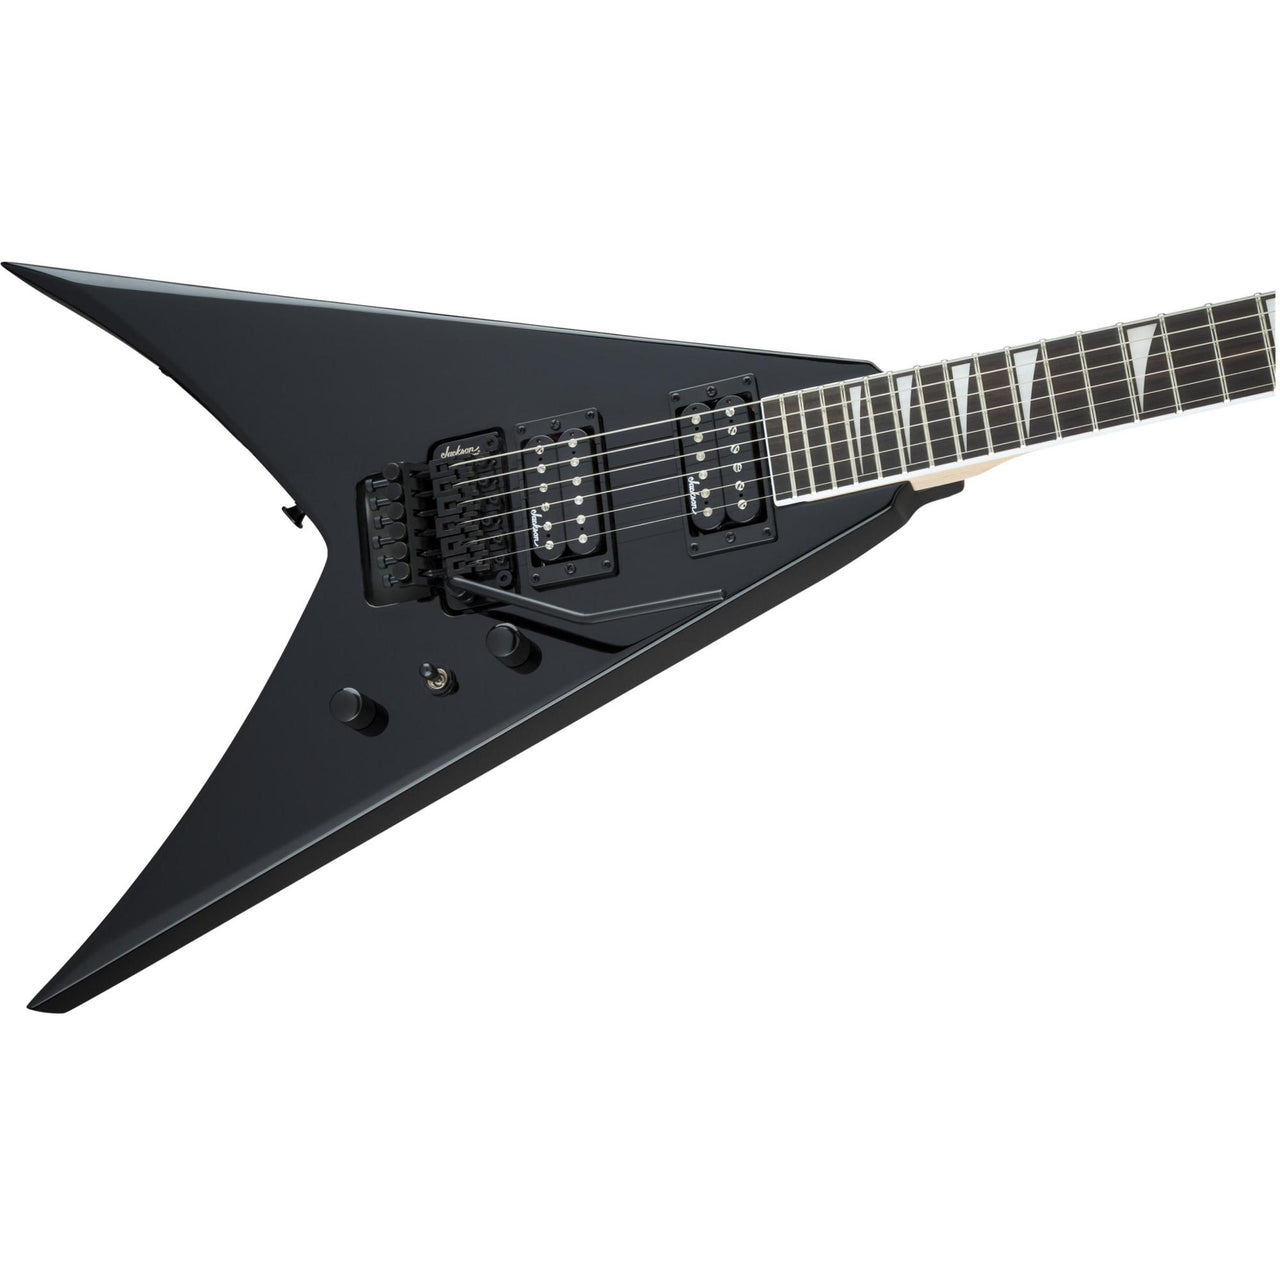 Guitarra Jackson Js32 King V  Electrica Gloss Black 2910224503